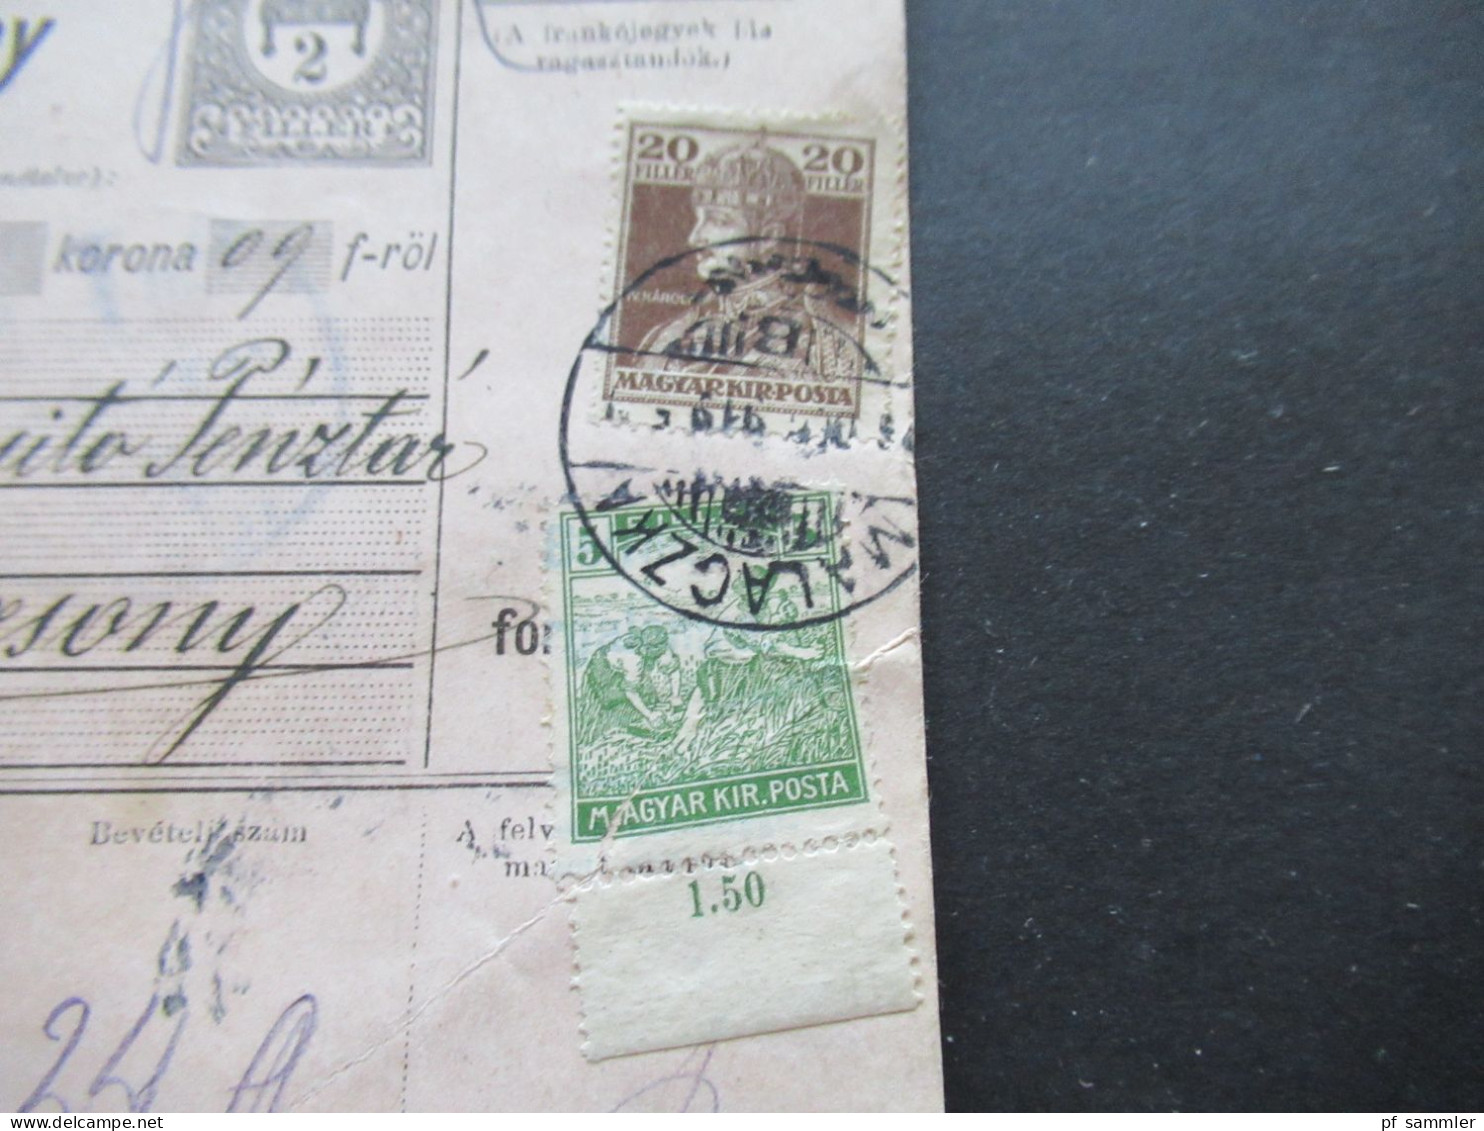 Ungarn 1919 GA / Postanweisung Postautalvany Mit 2x Zusatzfrankatur Rückseitig Violetter Stempel Pozsony - Covers & Documents